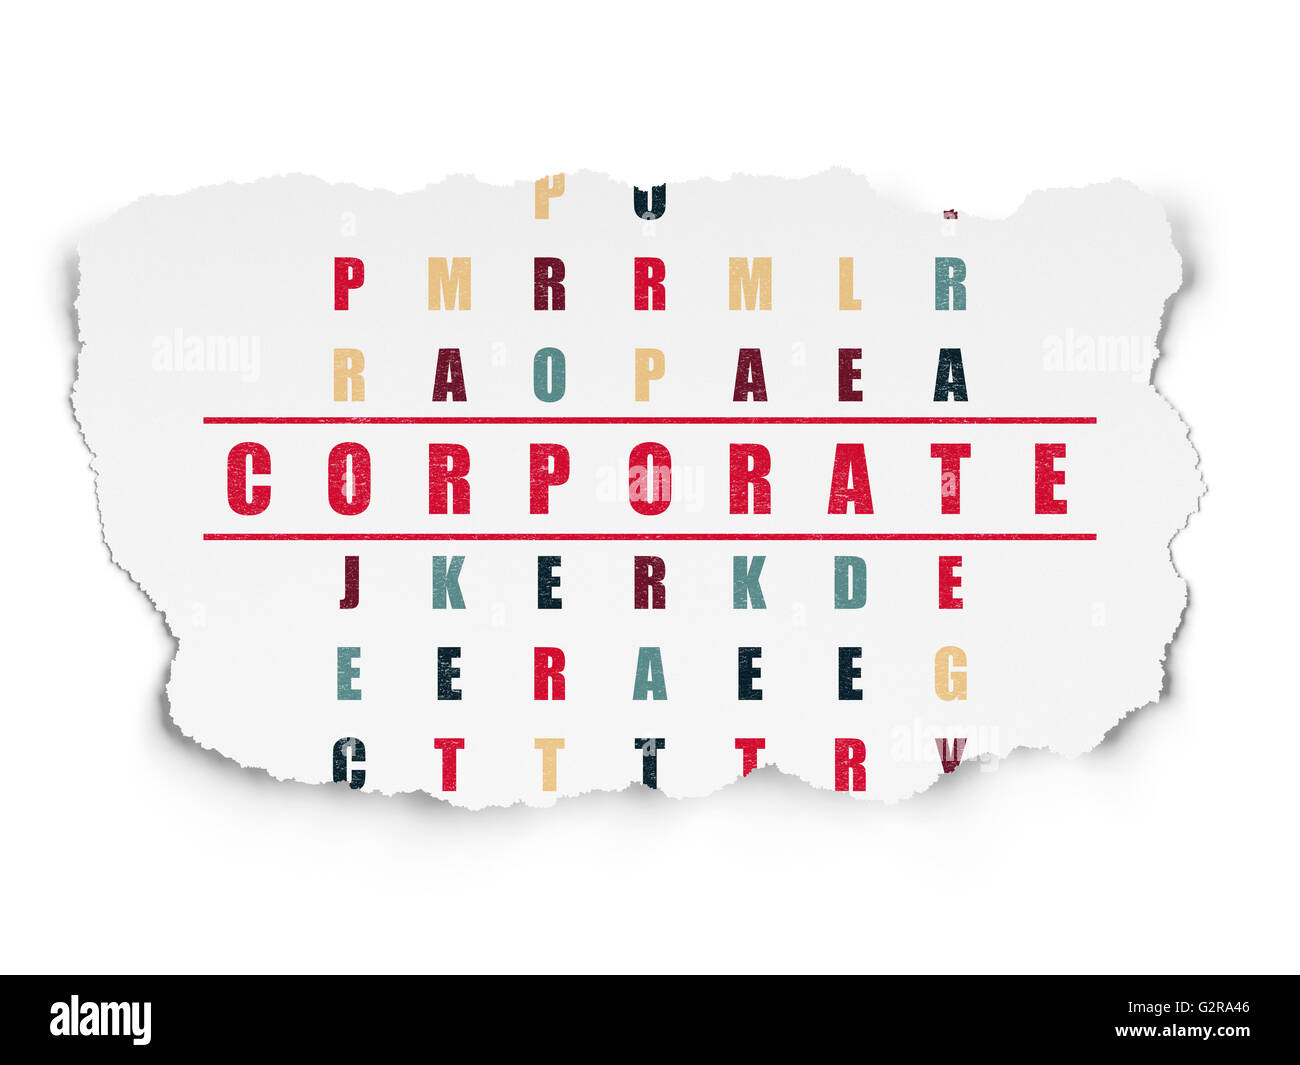 Finance concept: Corporate in Crossword Puzzle Stock Photo Alamy